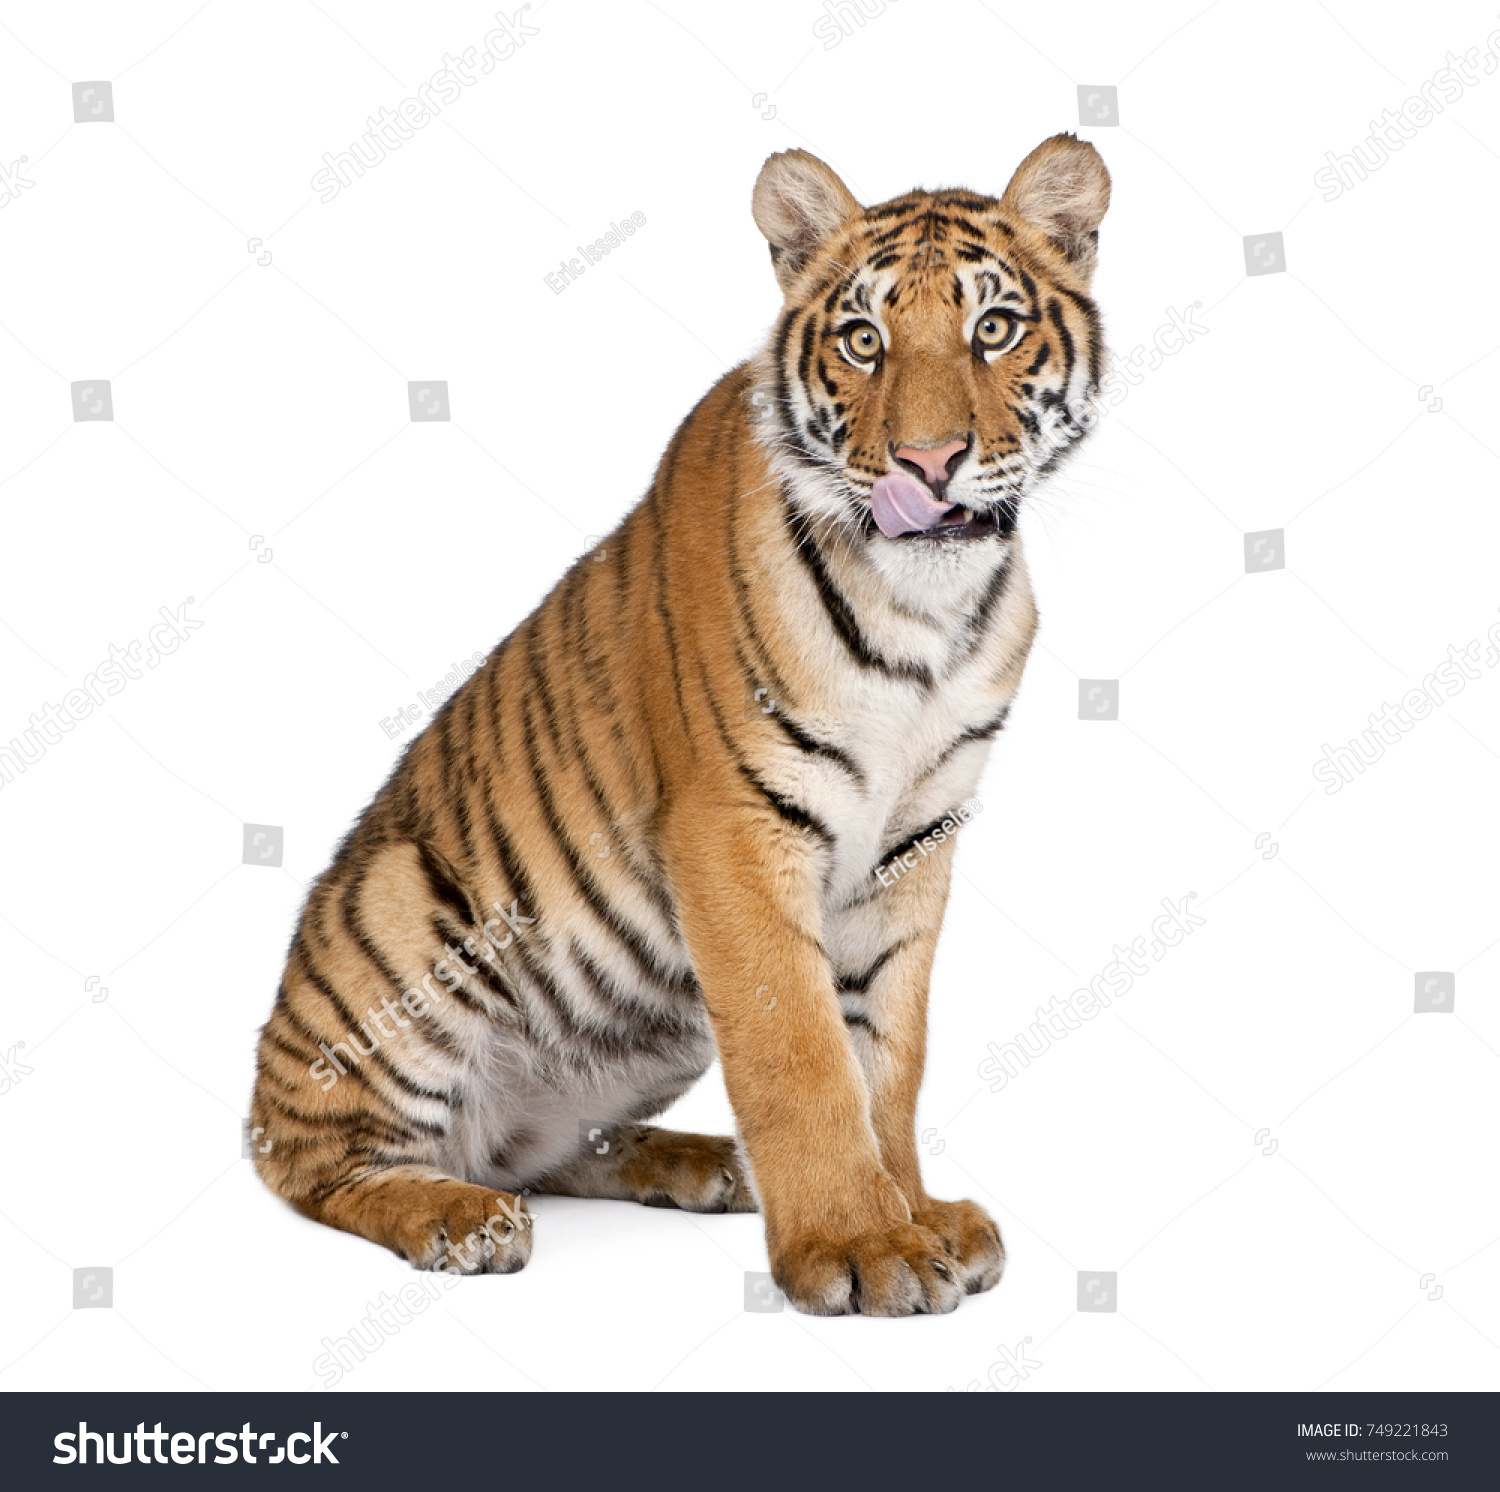 Portrait of Bengal Tiger, Panthera tigris tigris, 1 year old, sitting in front of white background, studio shot #749221843